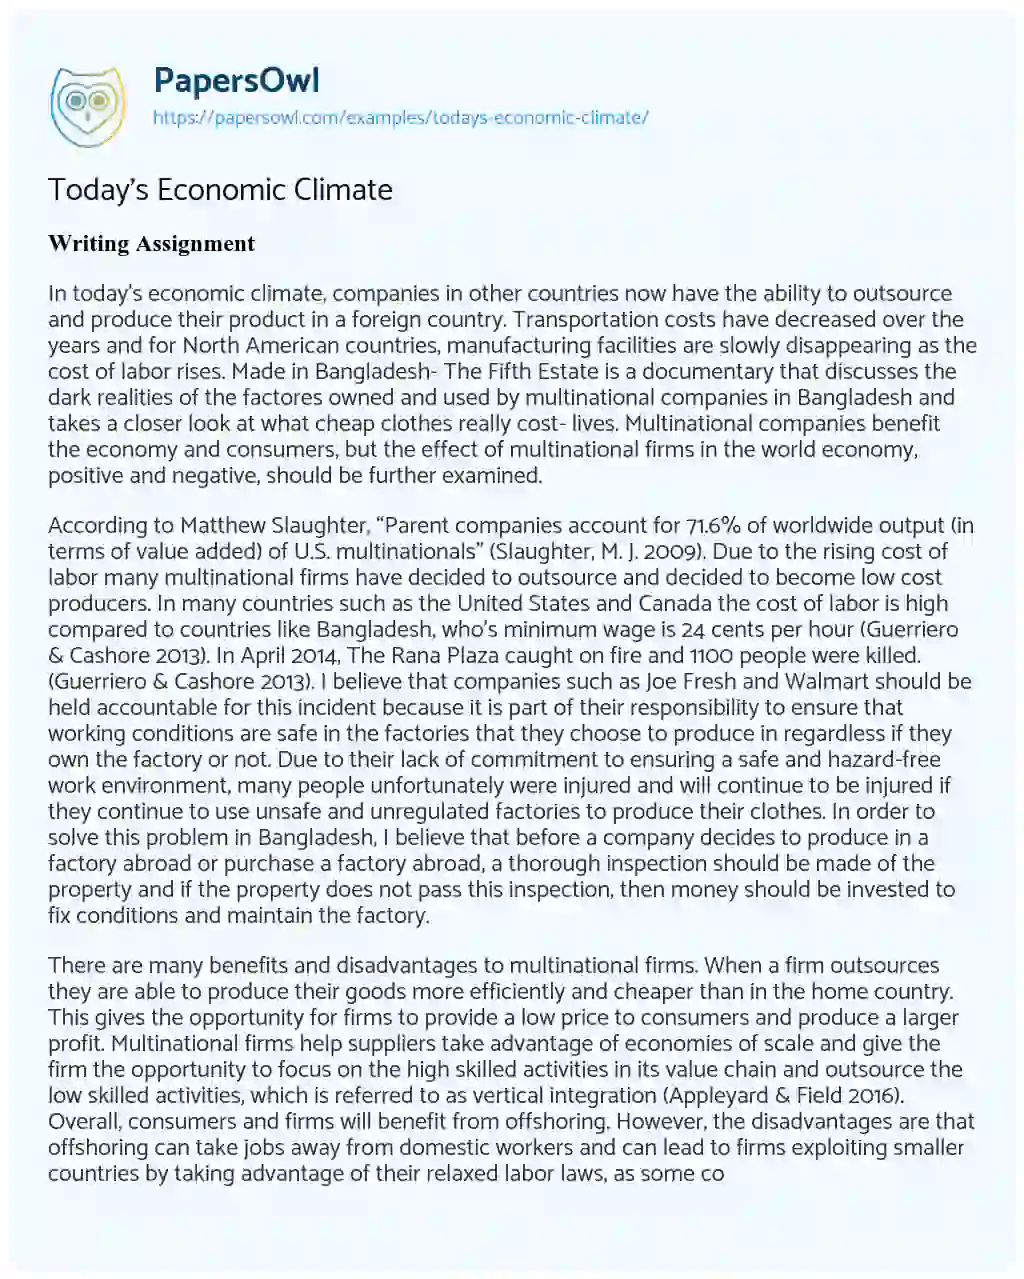 Today’s Economic Climate essay